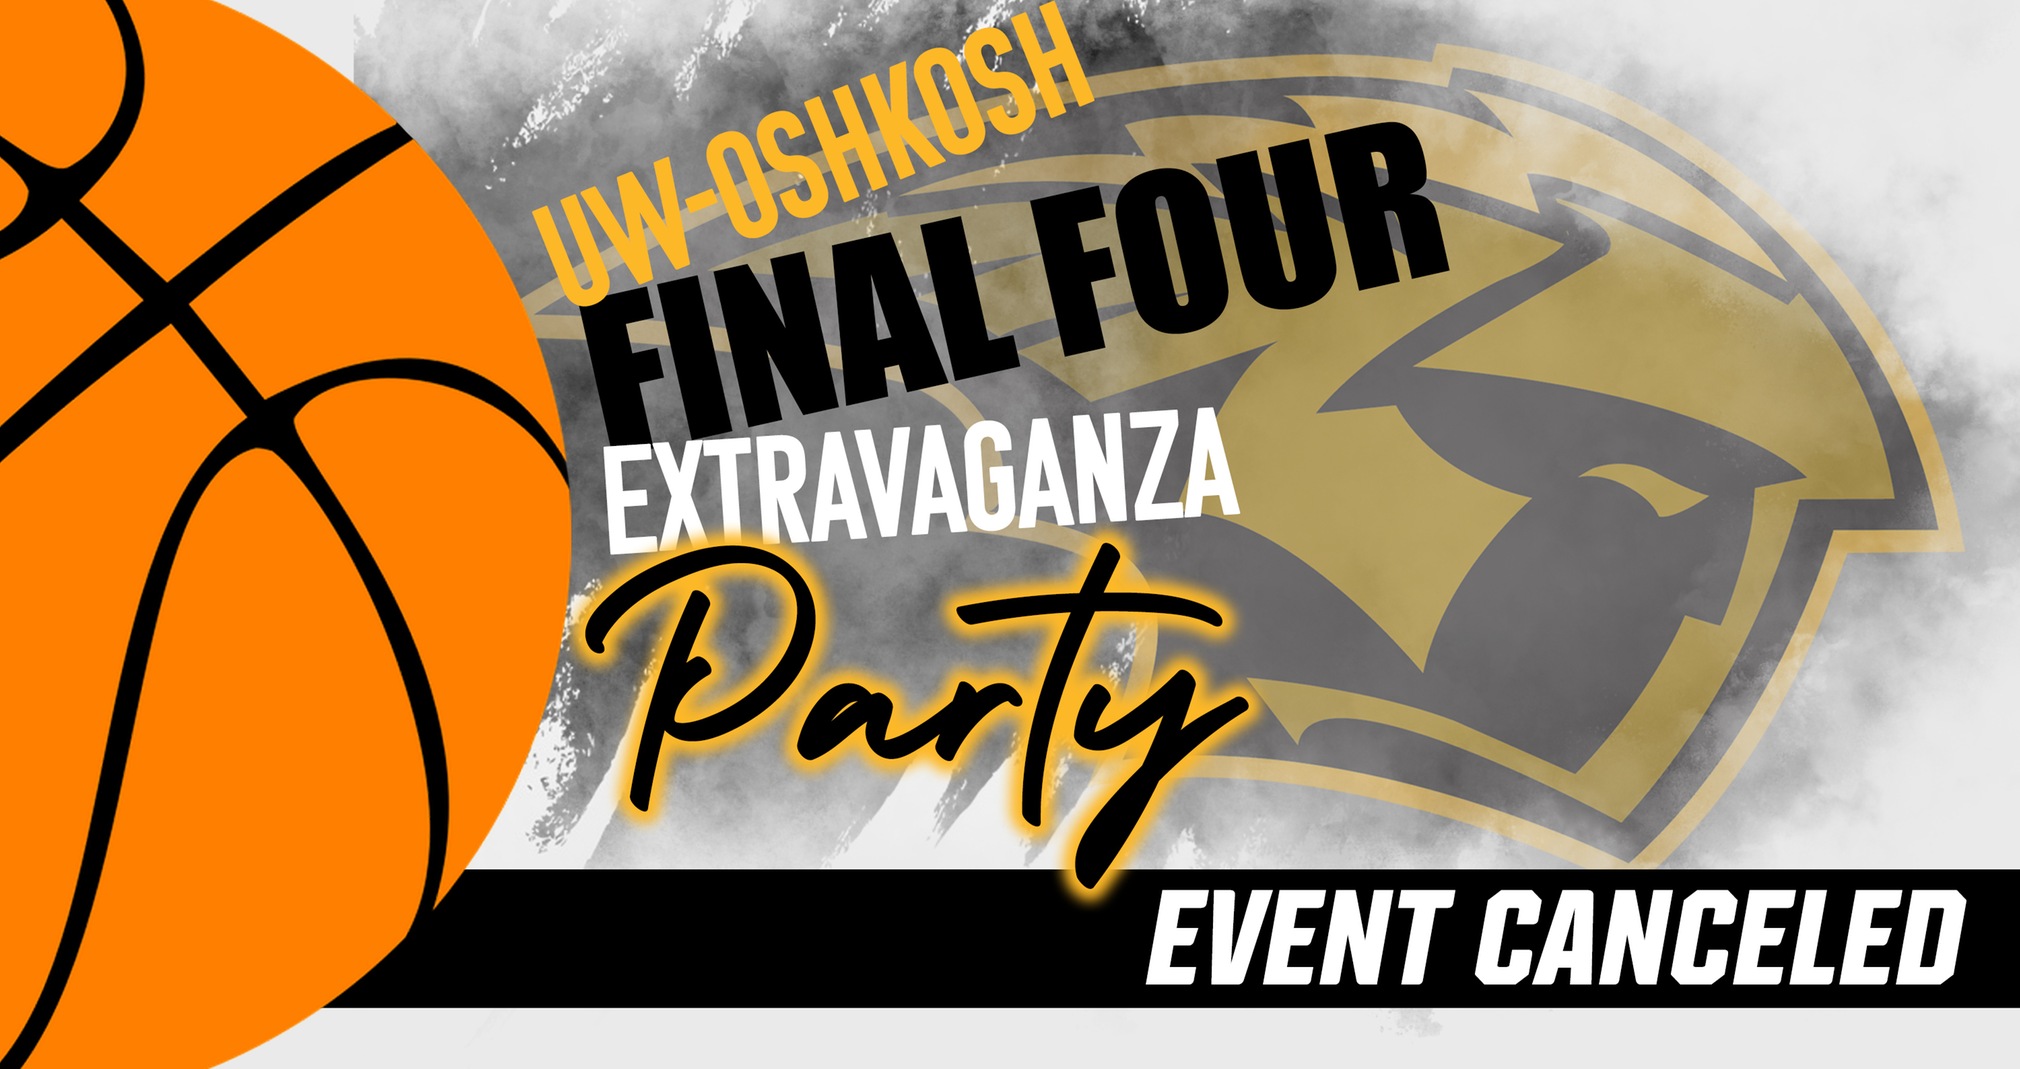 UW-Oshkosh Cancels Final Four Extravaganza Party